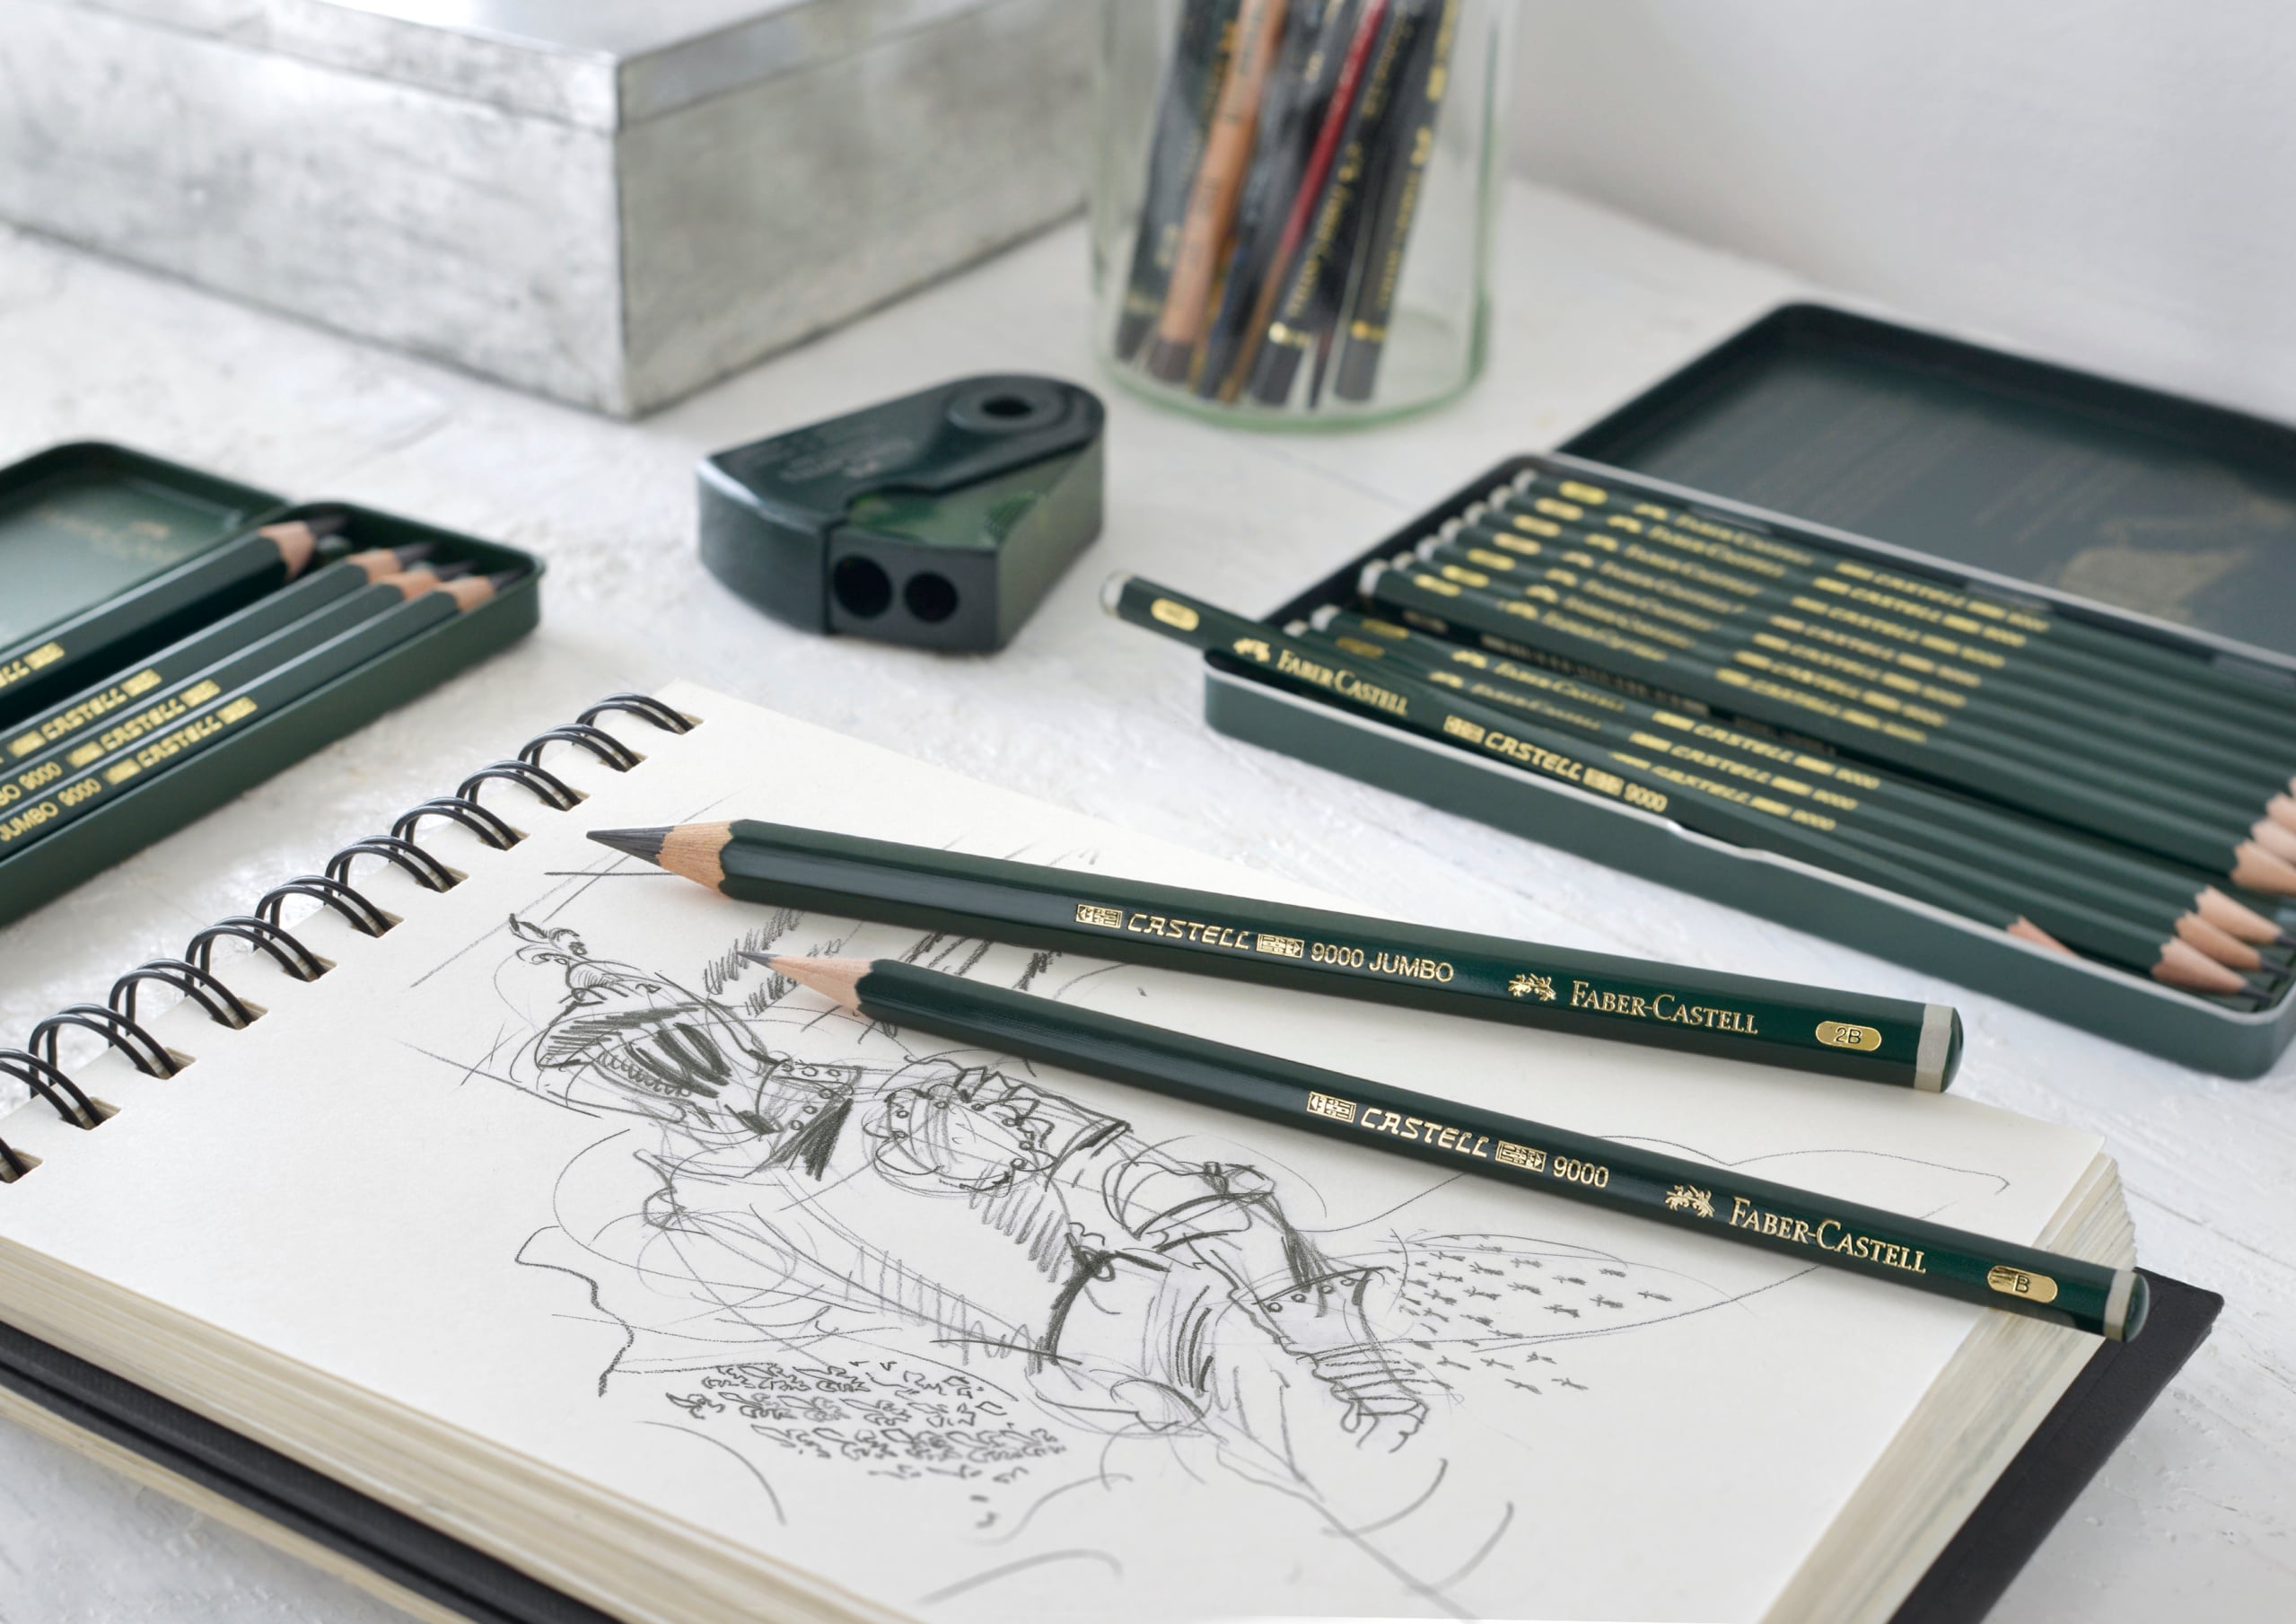  Faber-Castell Art GRIP Aquarelle Watercolor Pencil Set, Tin of  36 Pencils : Everything Else